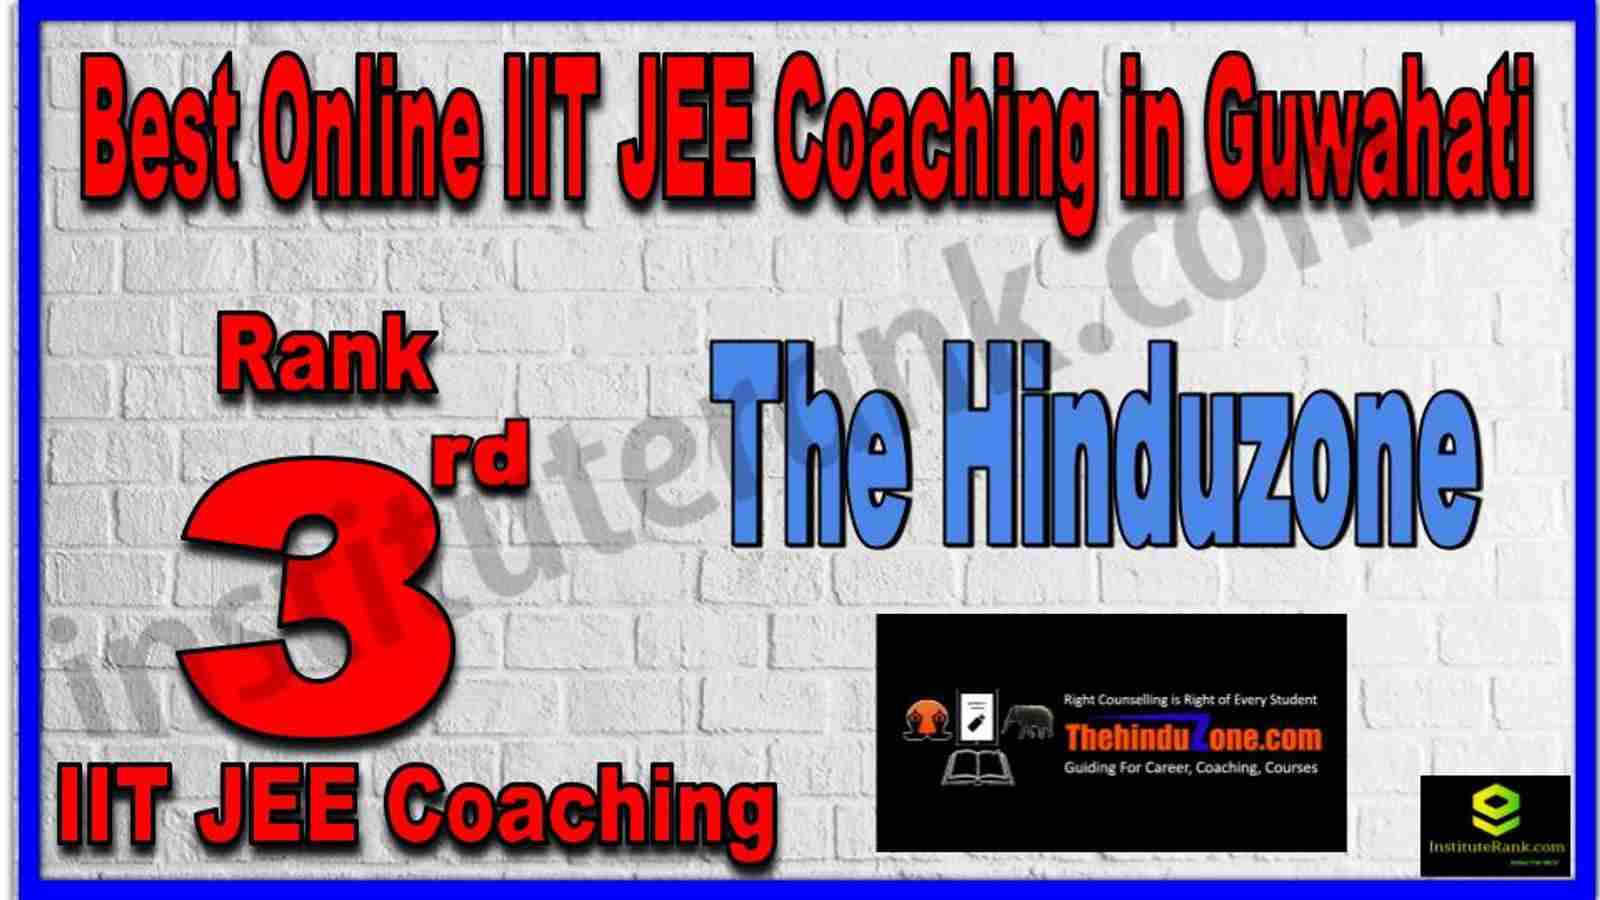 Rank 3rd Best Online IIT JEE Coaching in Guwahati